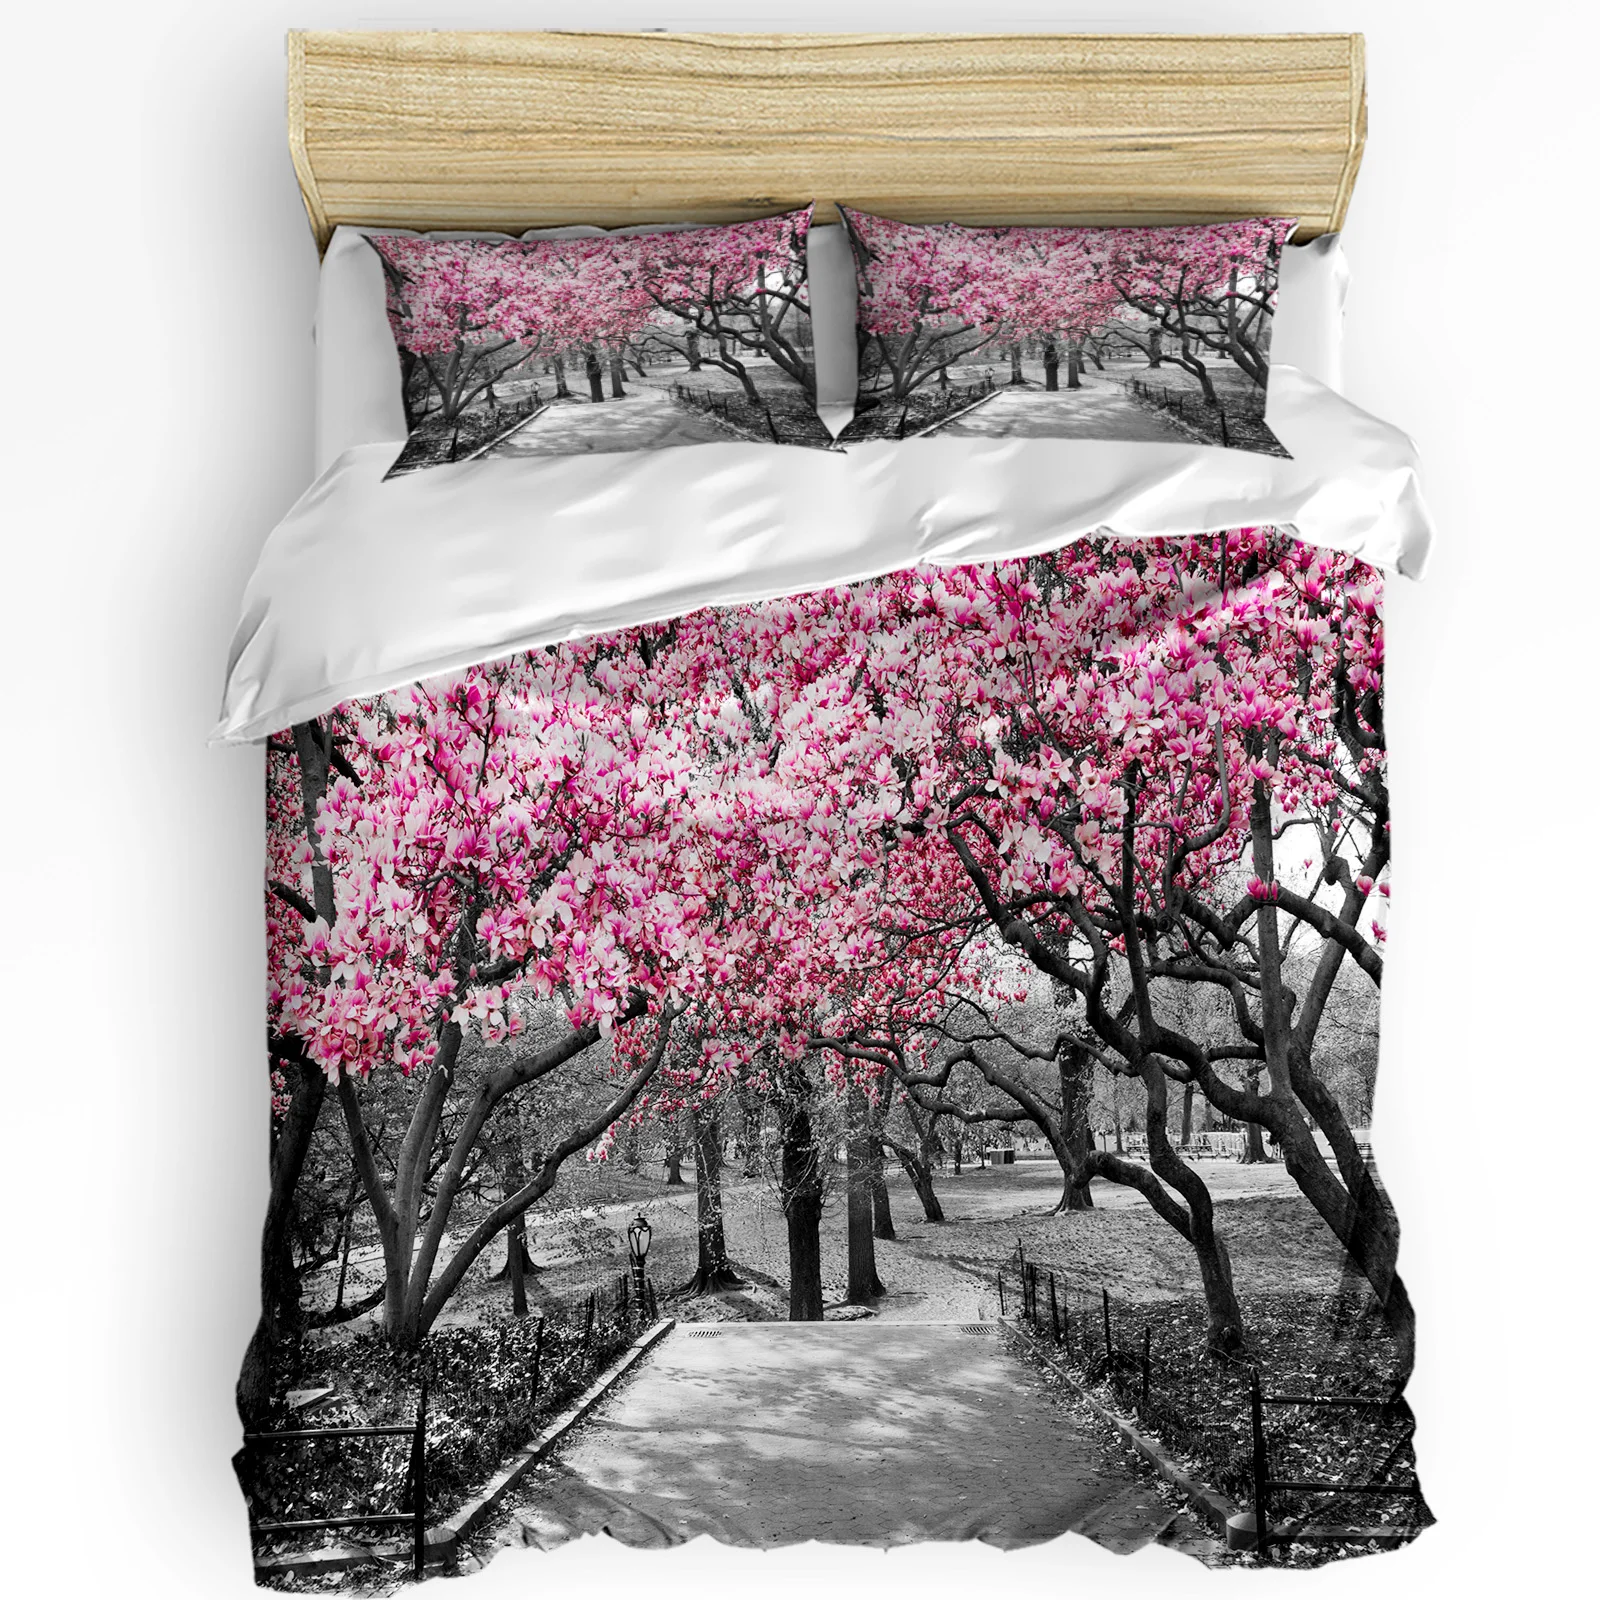 

3pcs Bedding Set Cherry Tree Park Home Textile Duvet Cover Pillow Case Boy Kid Teen Girl Bedding Covers Set